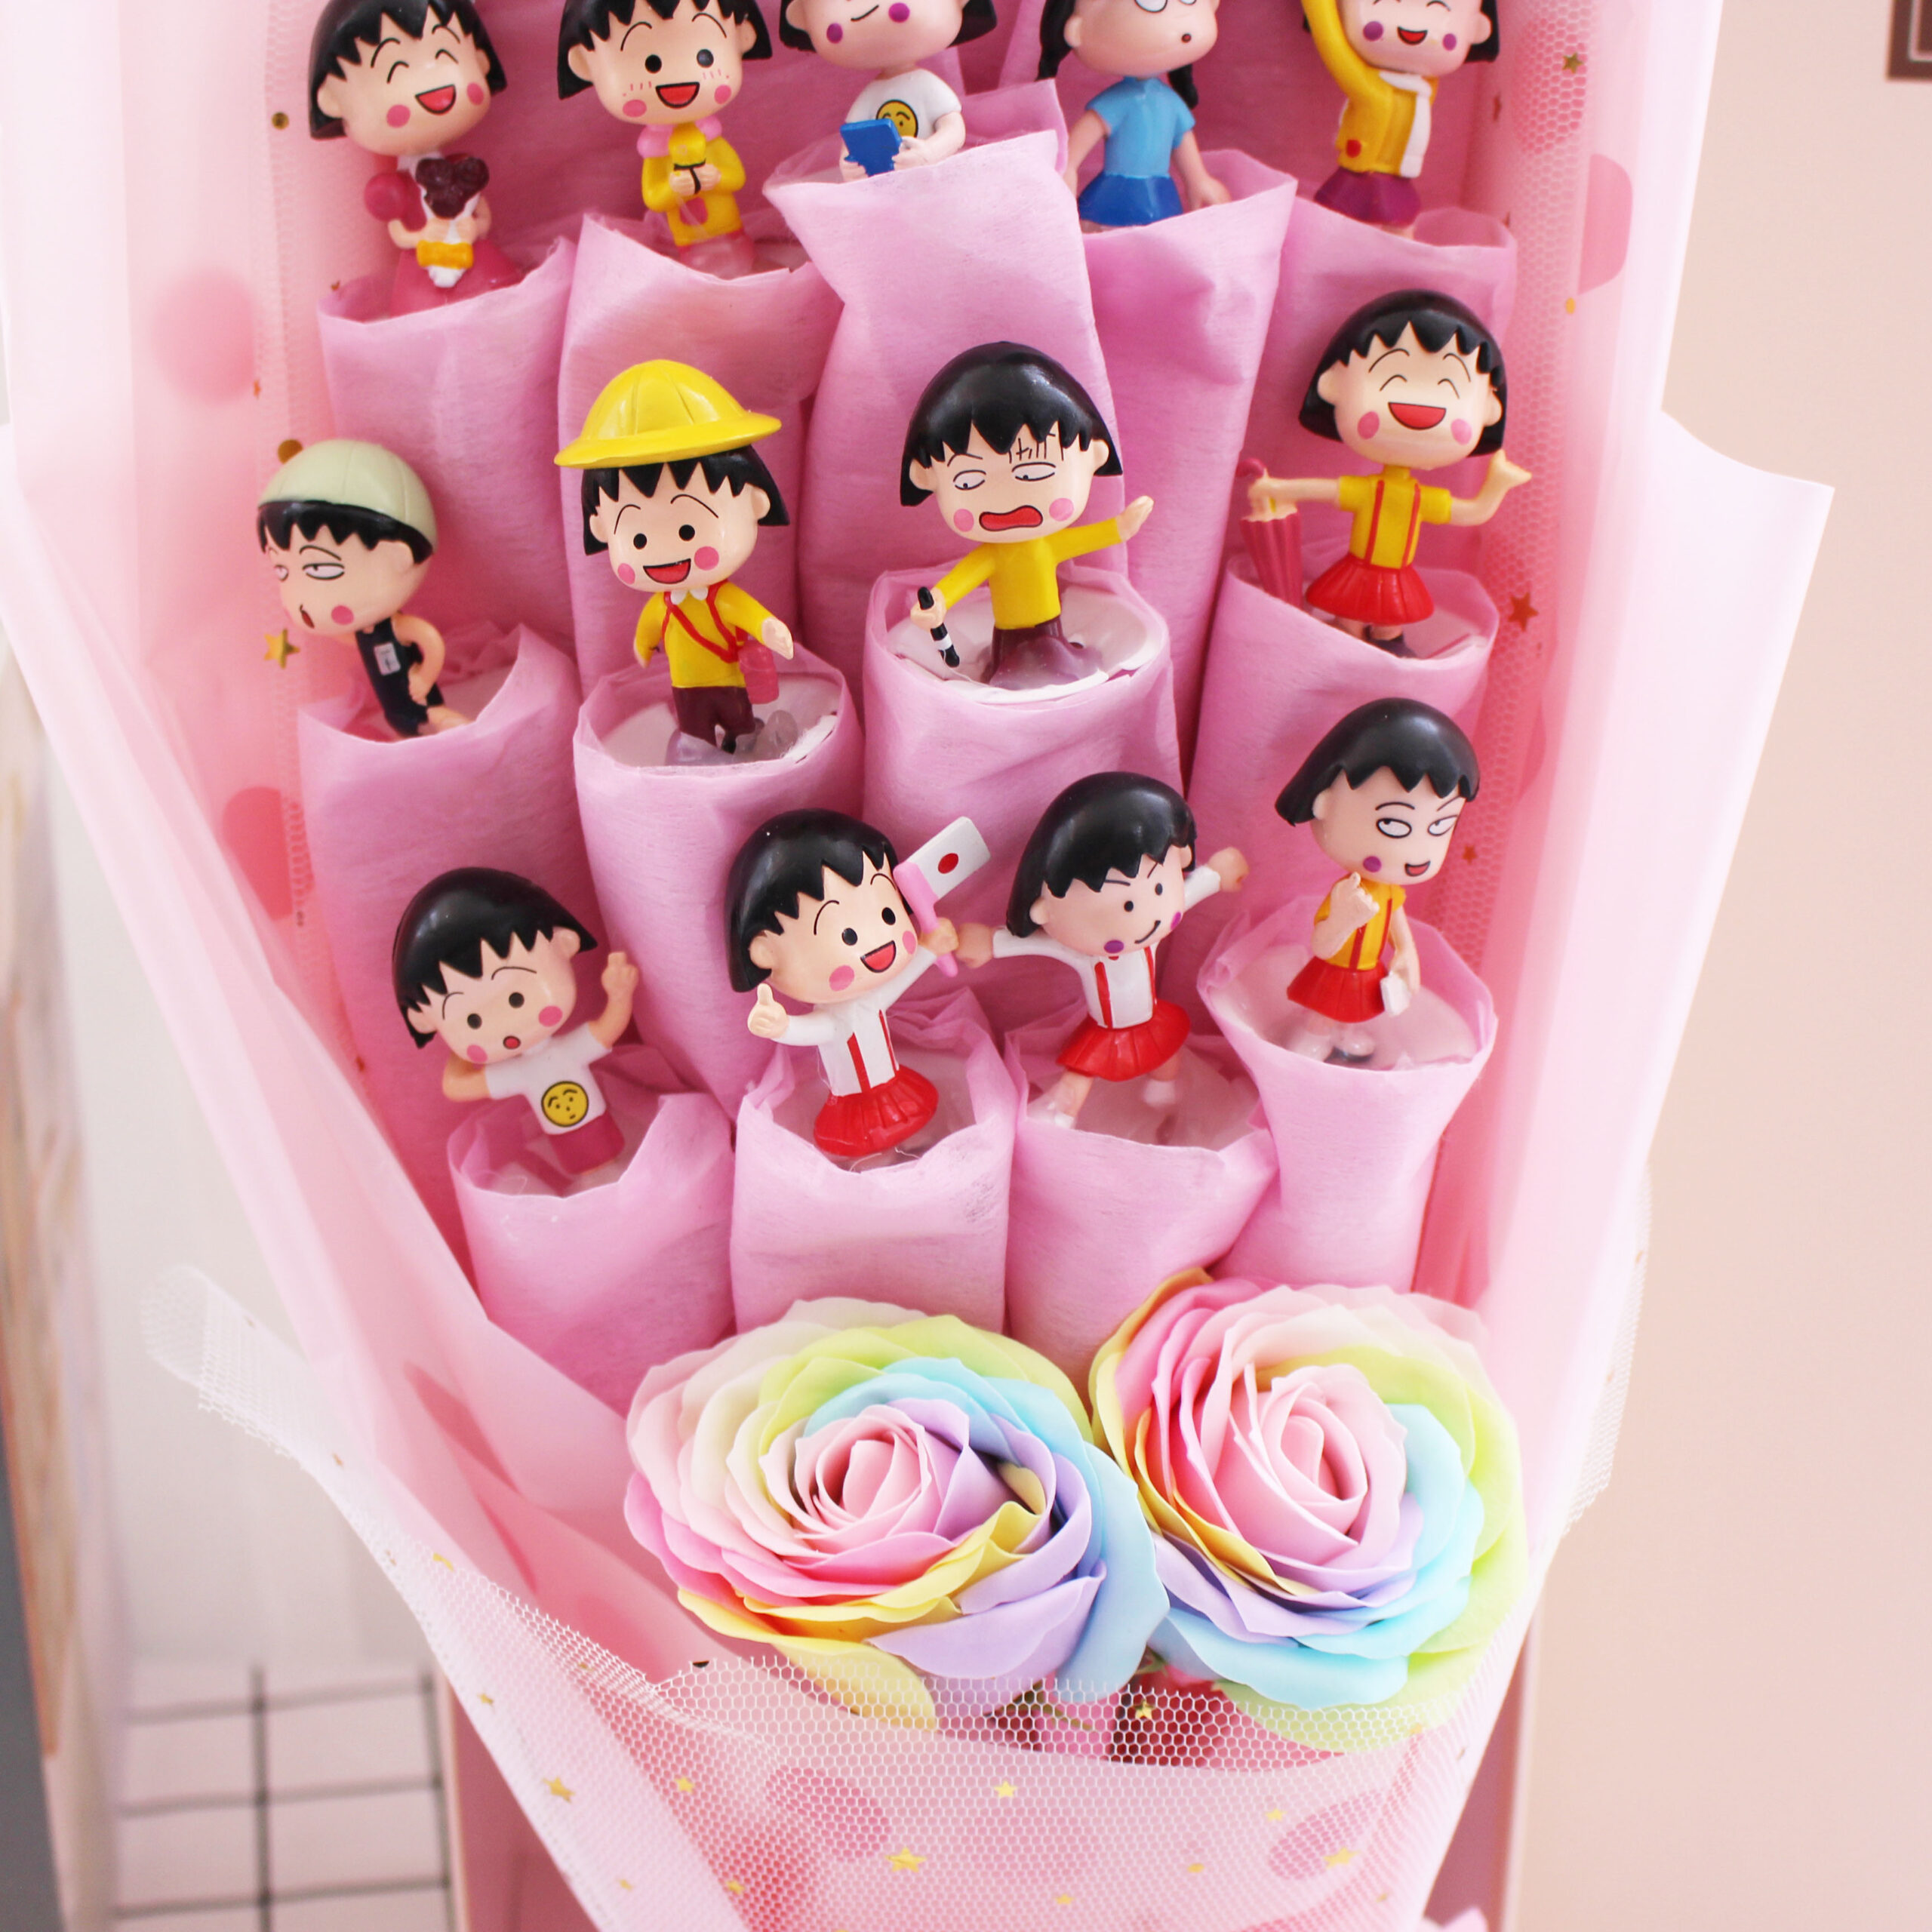 New Handmade Promotion Chibi Maruko cartoon miniature figurines Kids Toy Flower Bouquet Creative birthday gifts Christmas gift Uncategorized